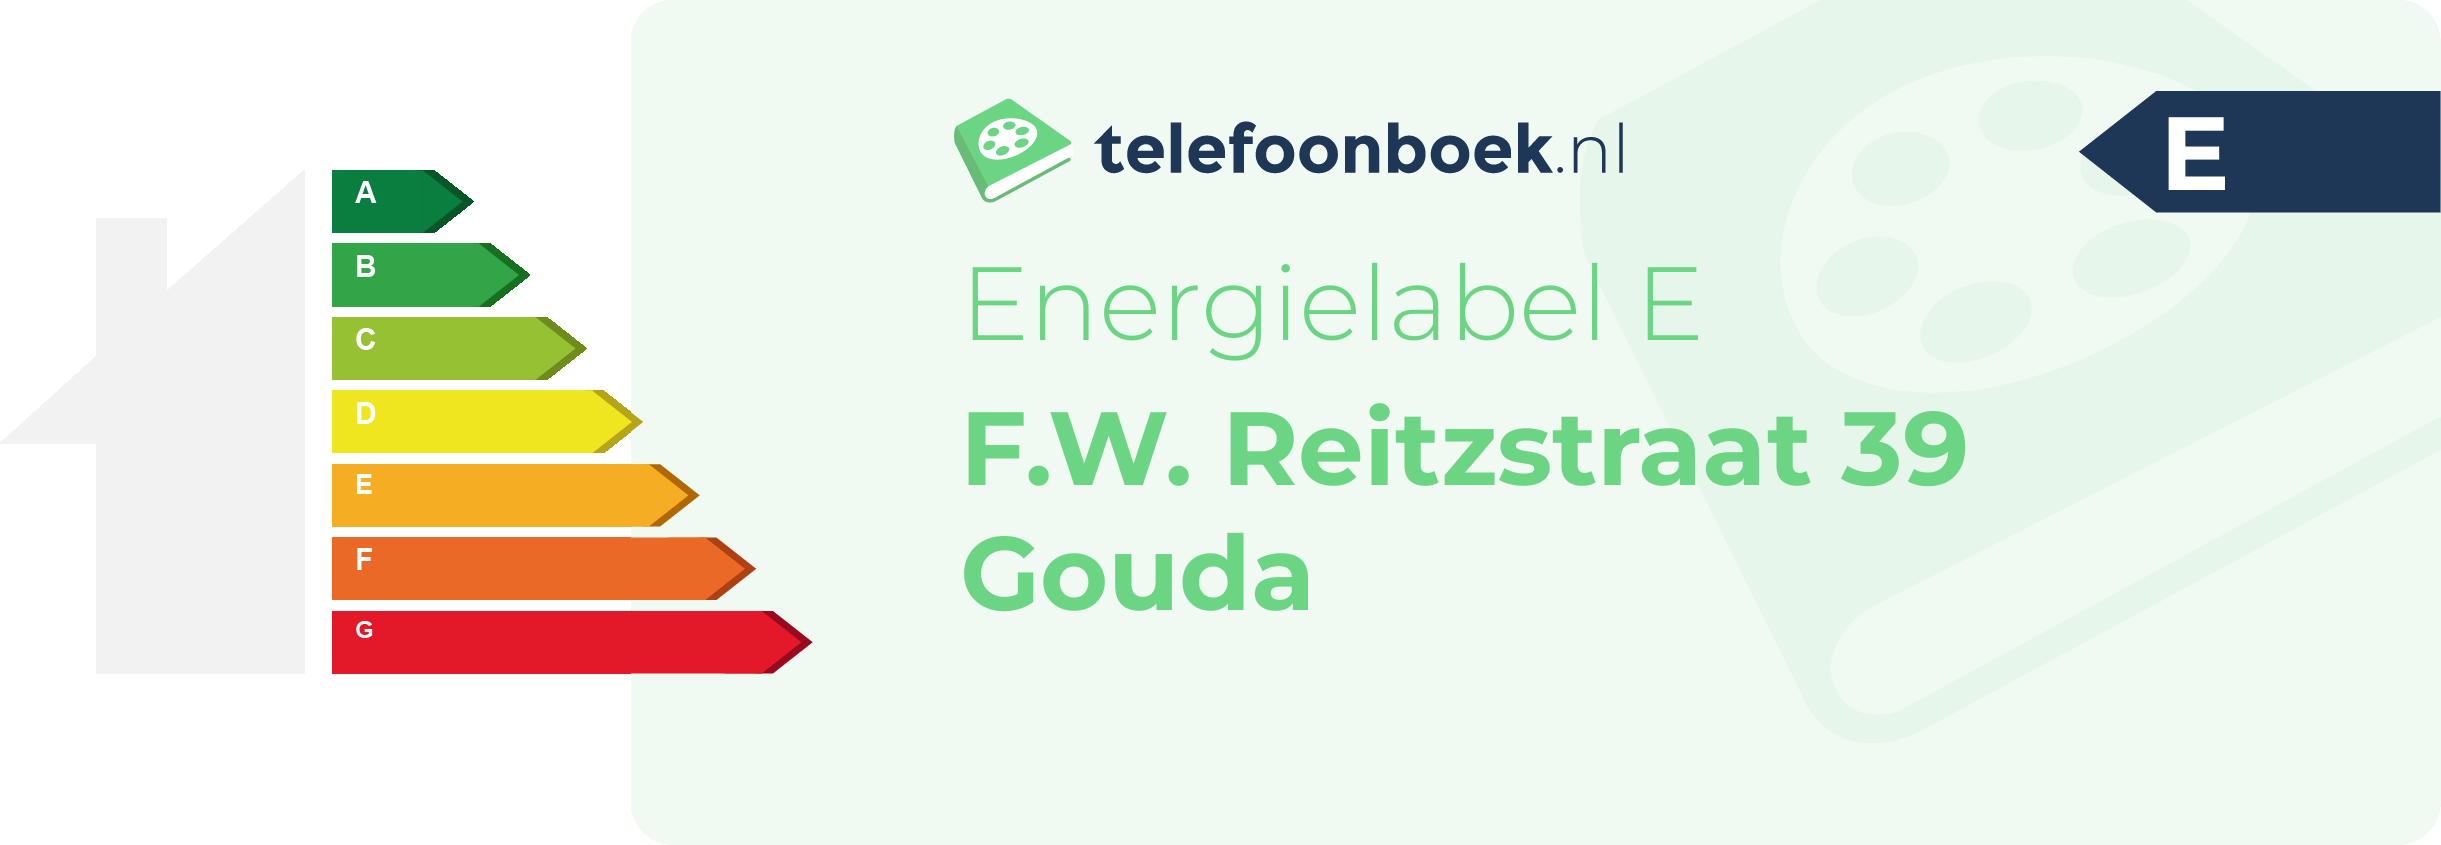 Energielabel F.W. Reitzstraat 39 Gouda